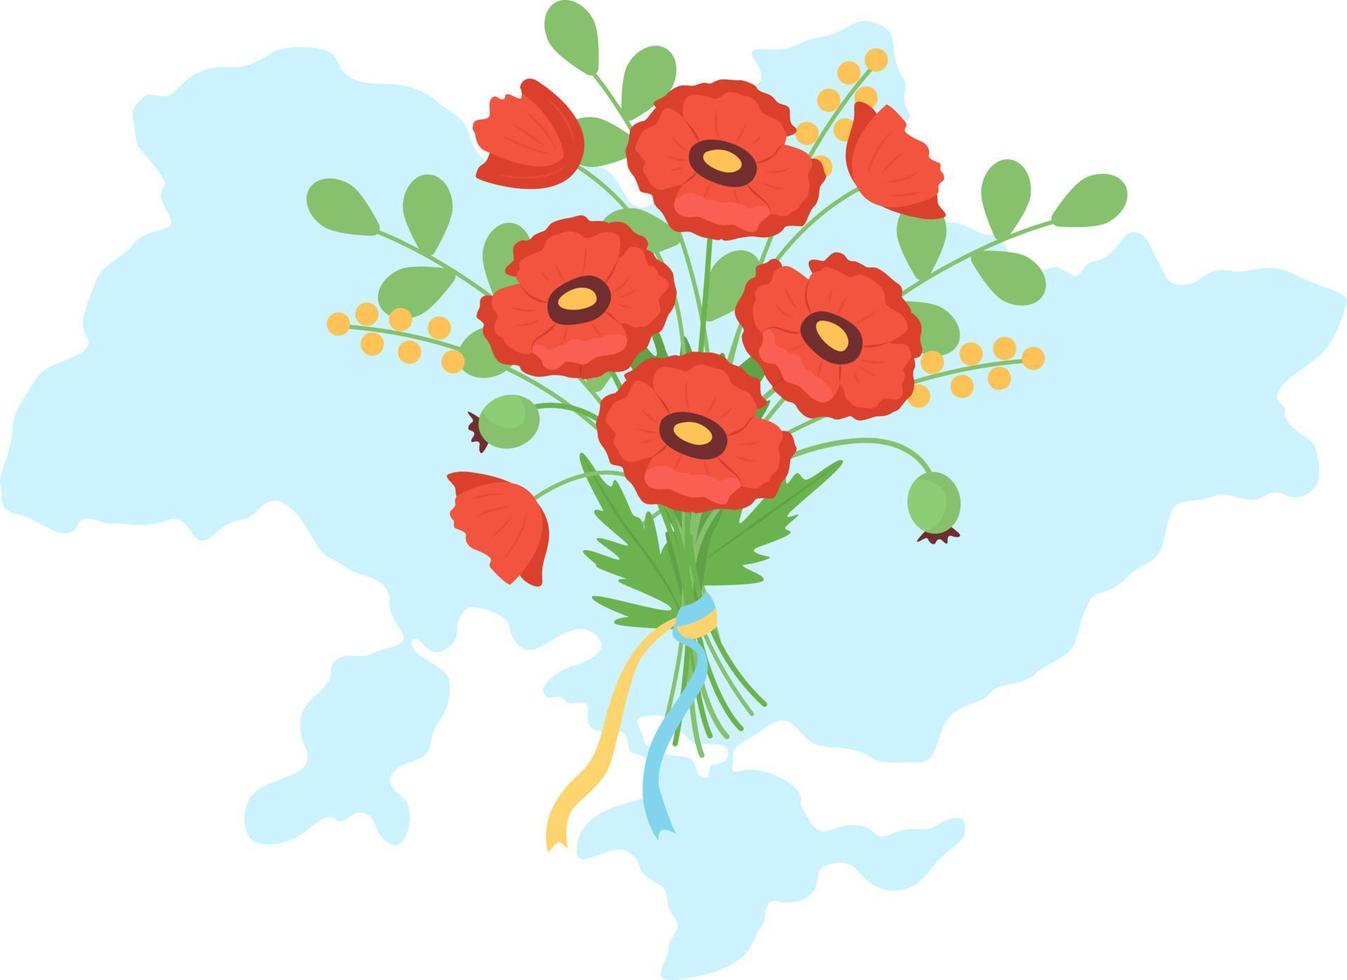 Memorial day in Ukraine 2D vector isolated illustration